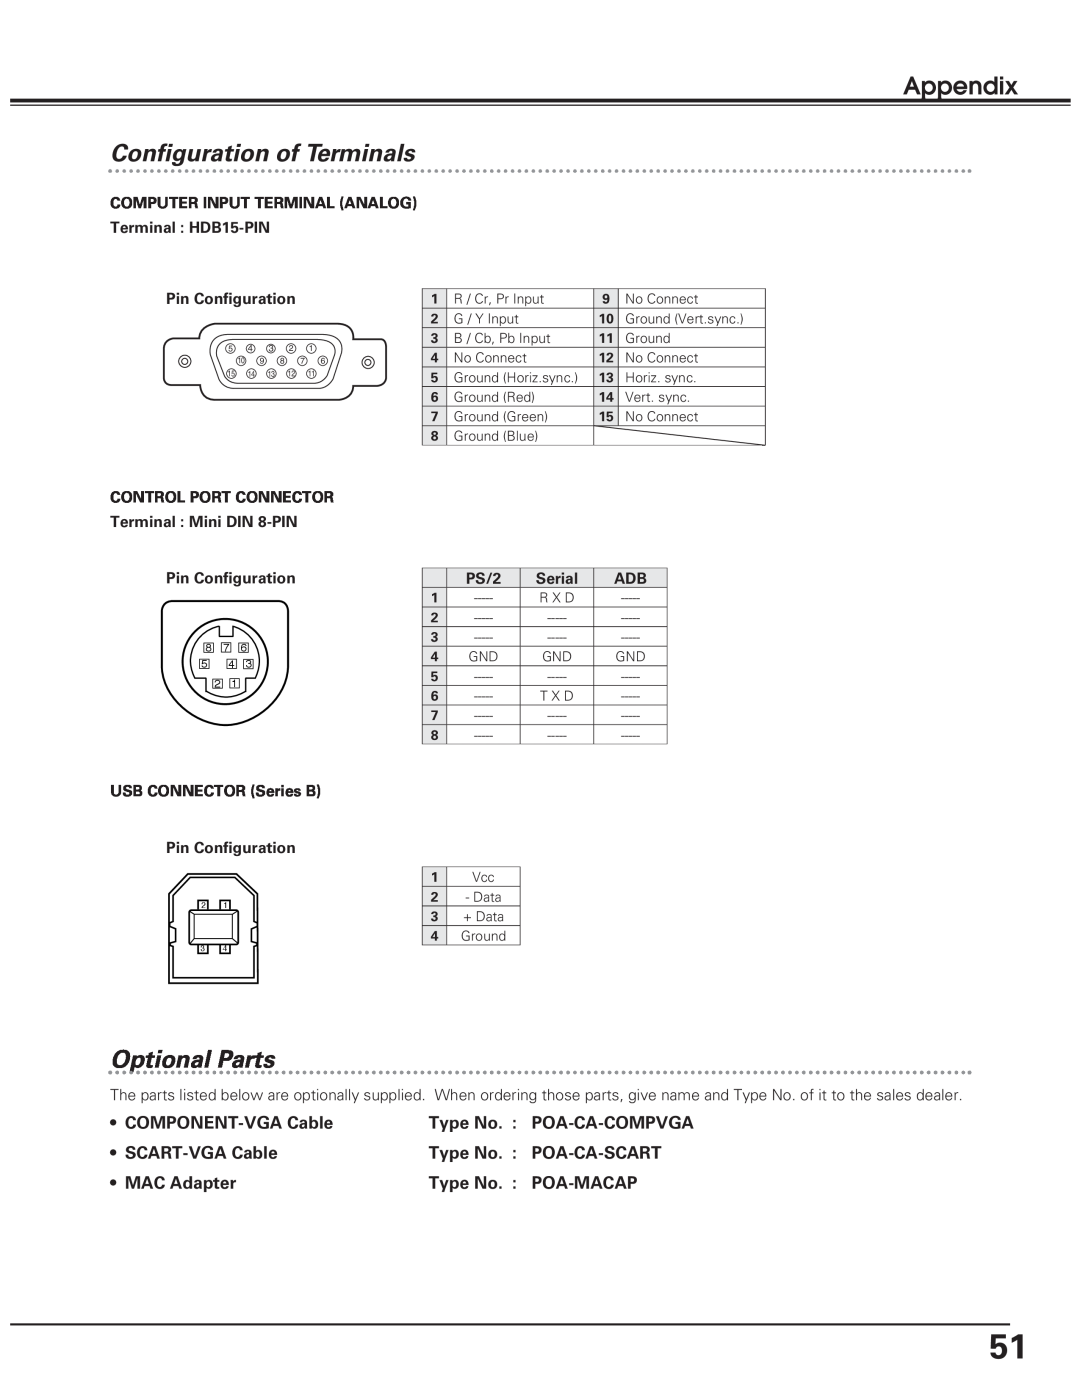 Eiki LC-SD10 Configuration of Terminals, Optional Parts, COMPONENT-VGACable, Type No, Poa-Ca-Compvga, • SCART-VGACable 